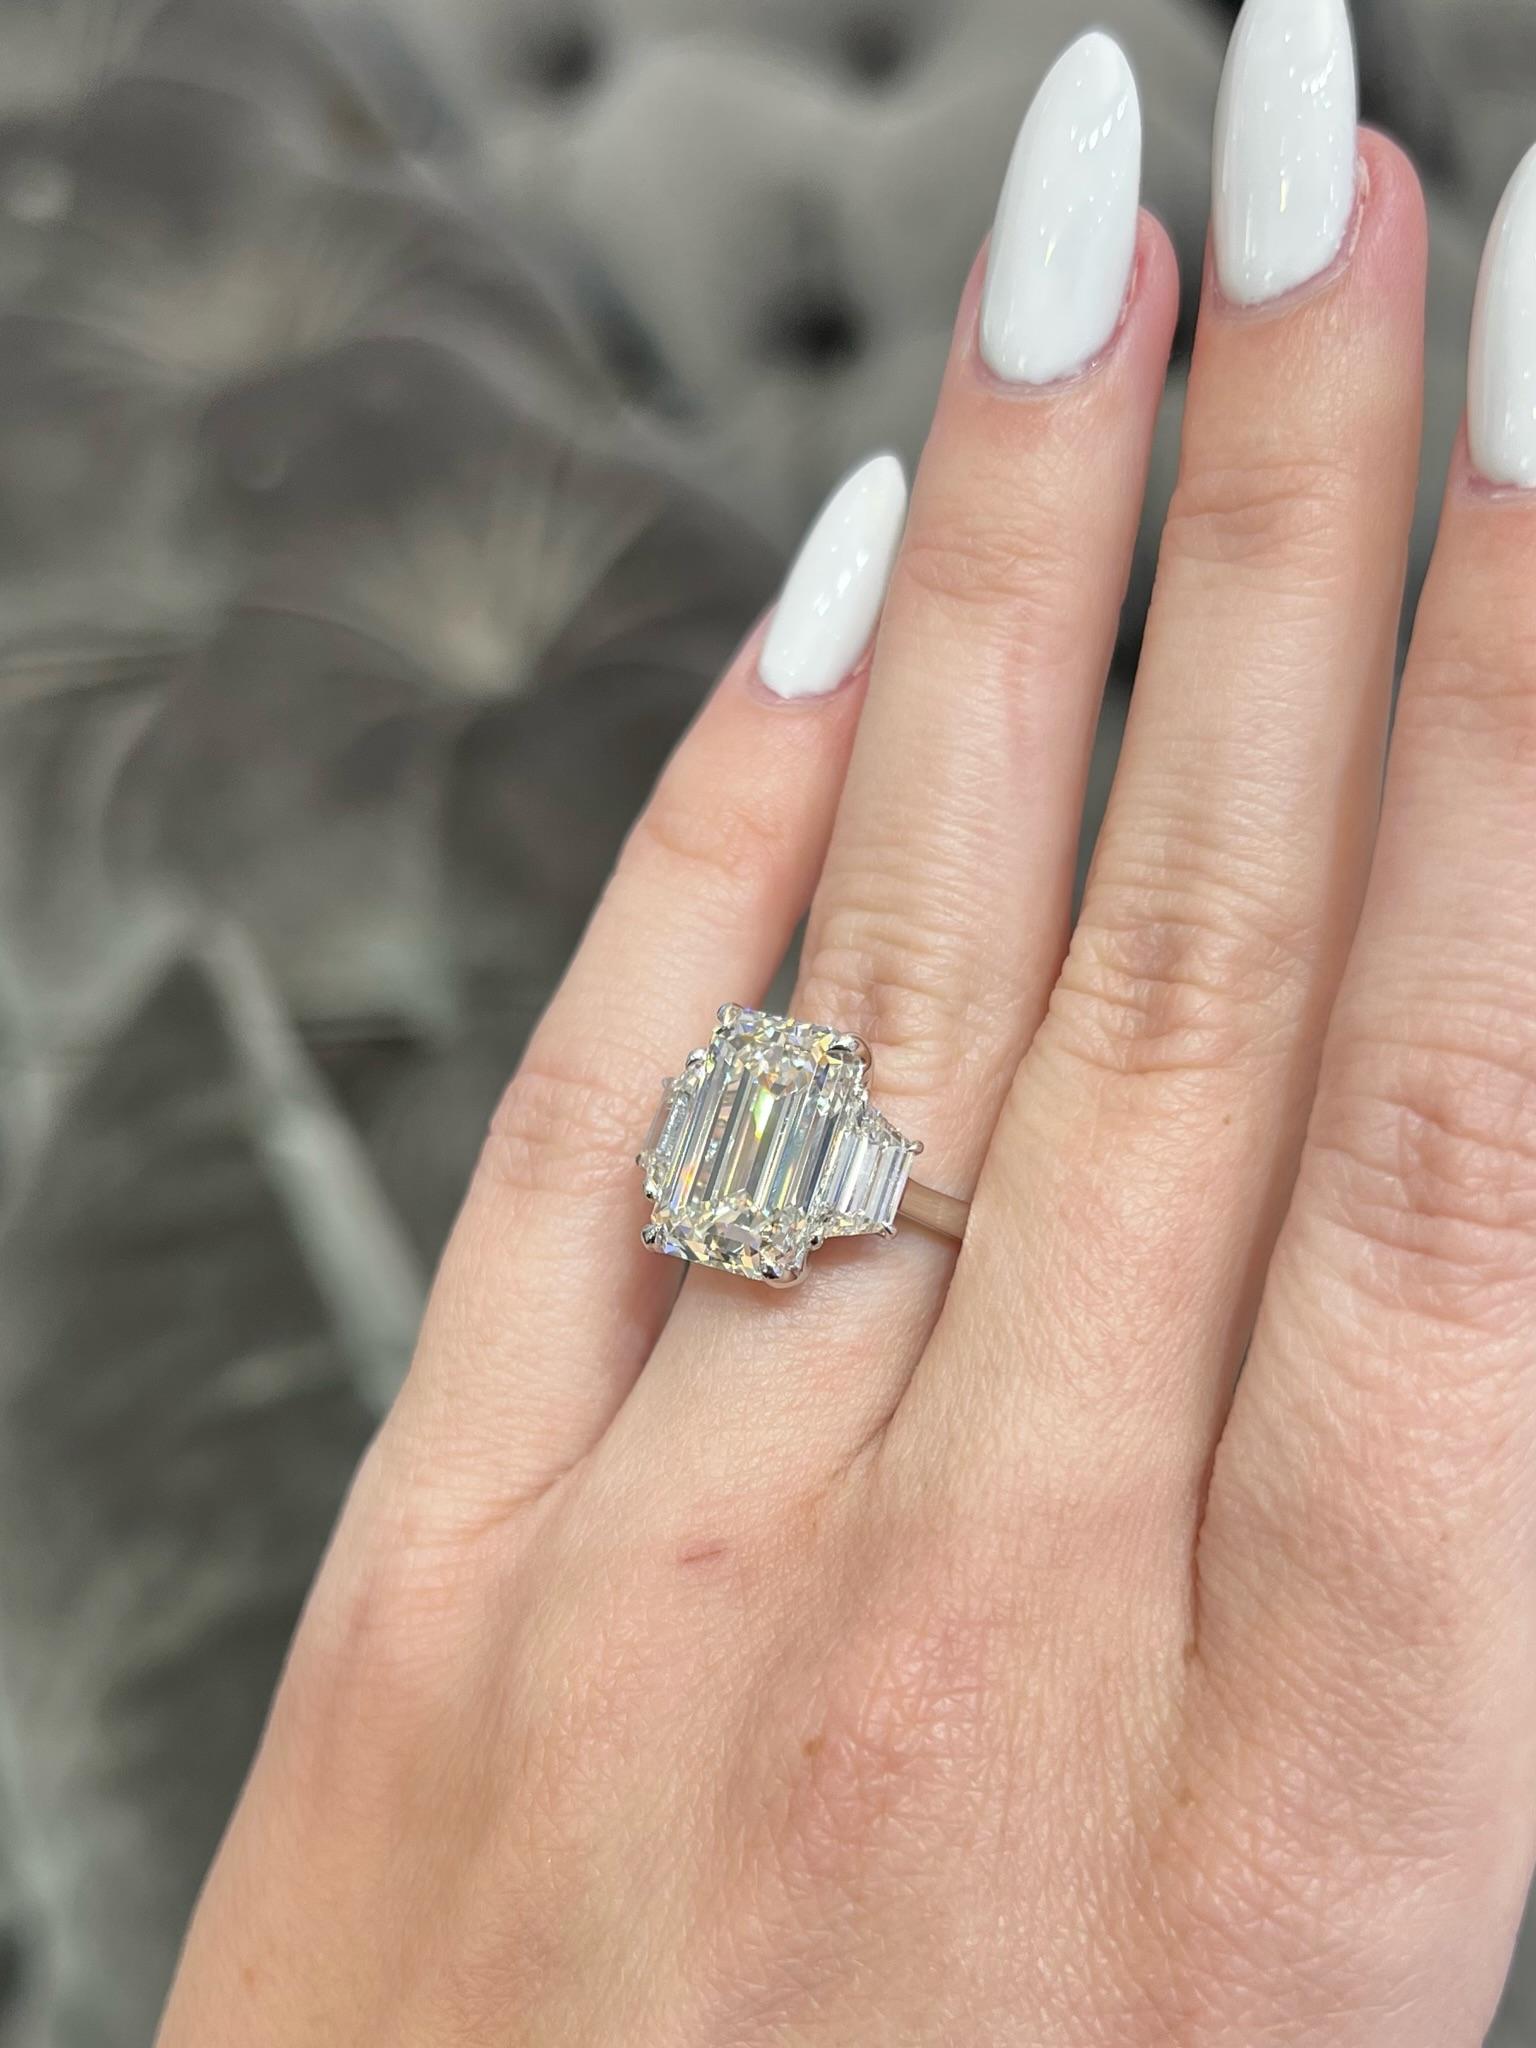 David Rosenberg 7.27 Carat Emerald Cut H VS1 GIA Diamond Engagement Ring For Sale 1